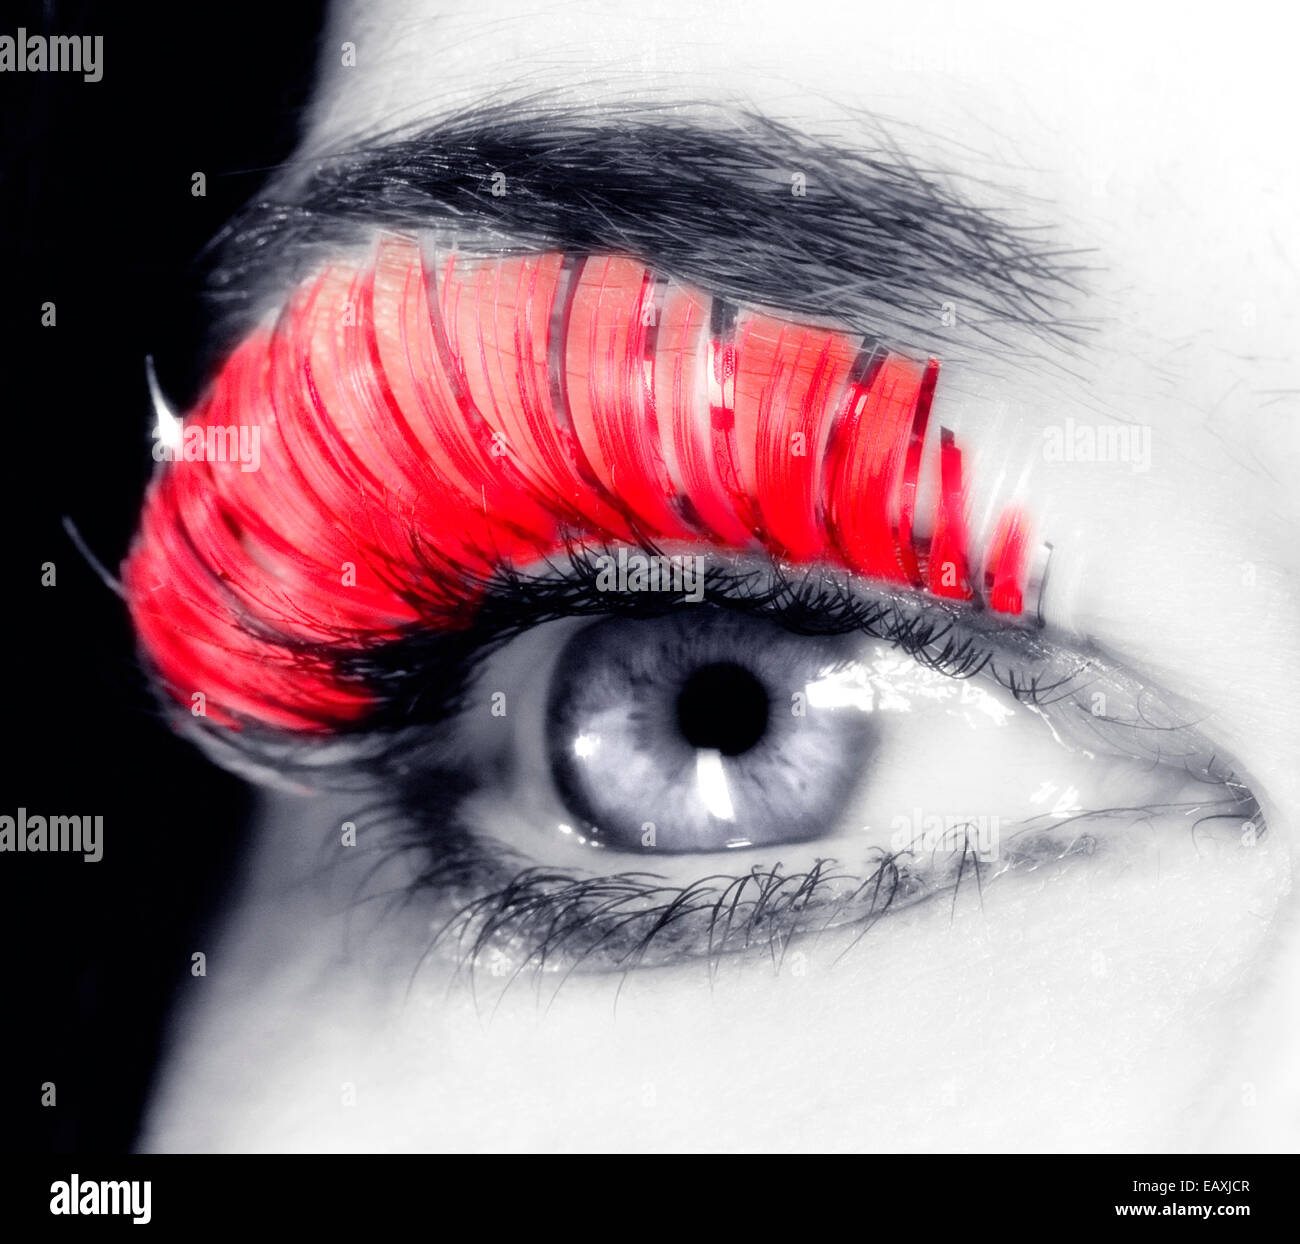 Extreme Closeup de ojos con largas Pestañas rojas Foto de stock